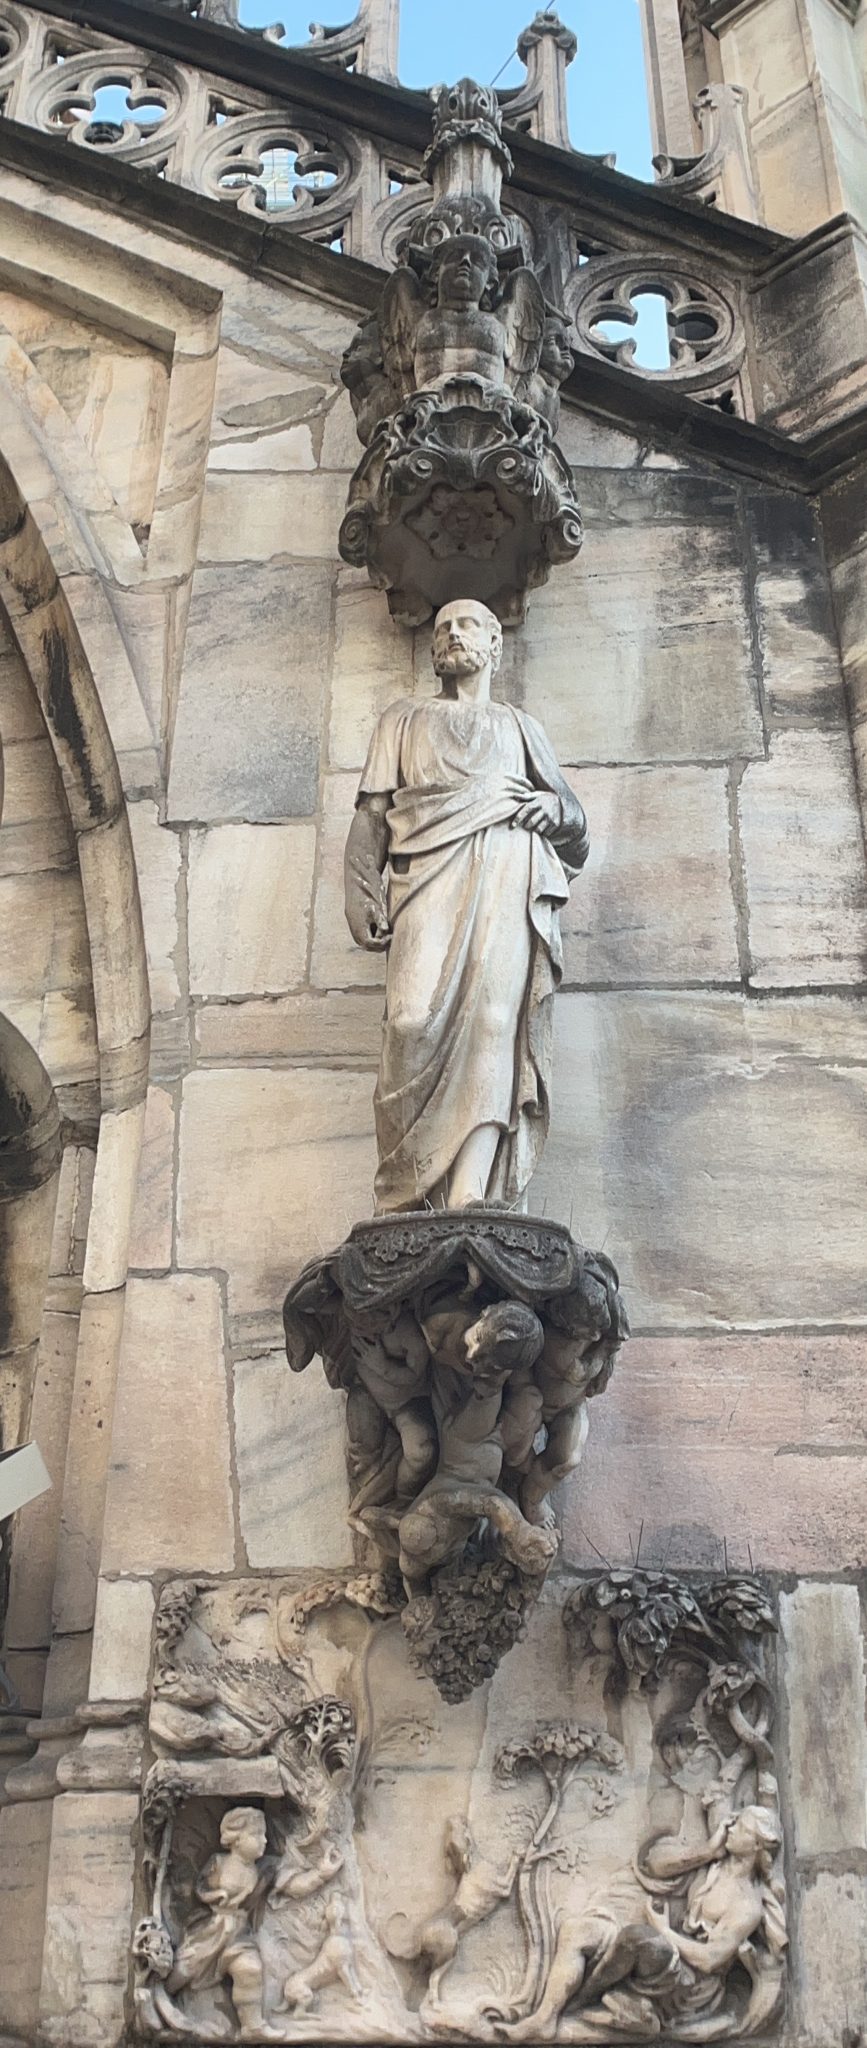 Saint statue, cathedral, Duomo de Milano, Milan, italy